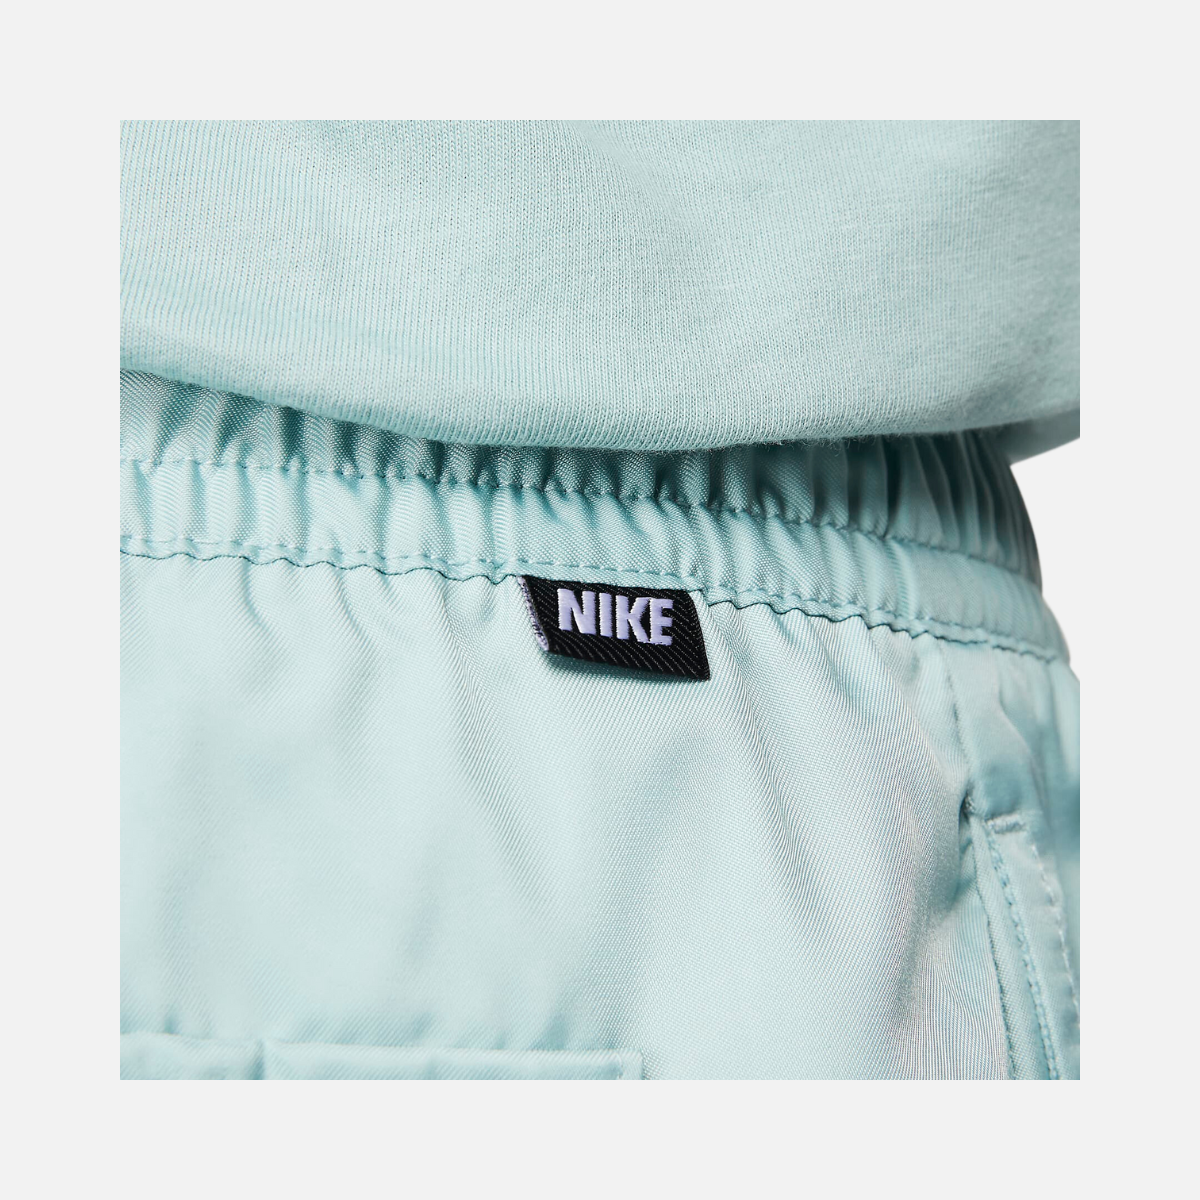 Nike Sportswear Sport Essentials Men's Woven Lined Flow Shorts -Mineral/White